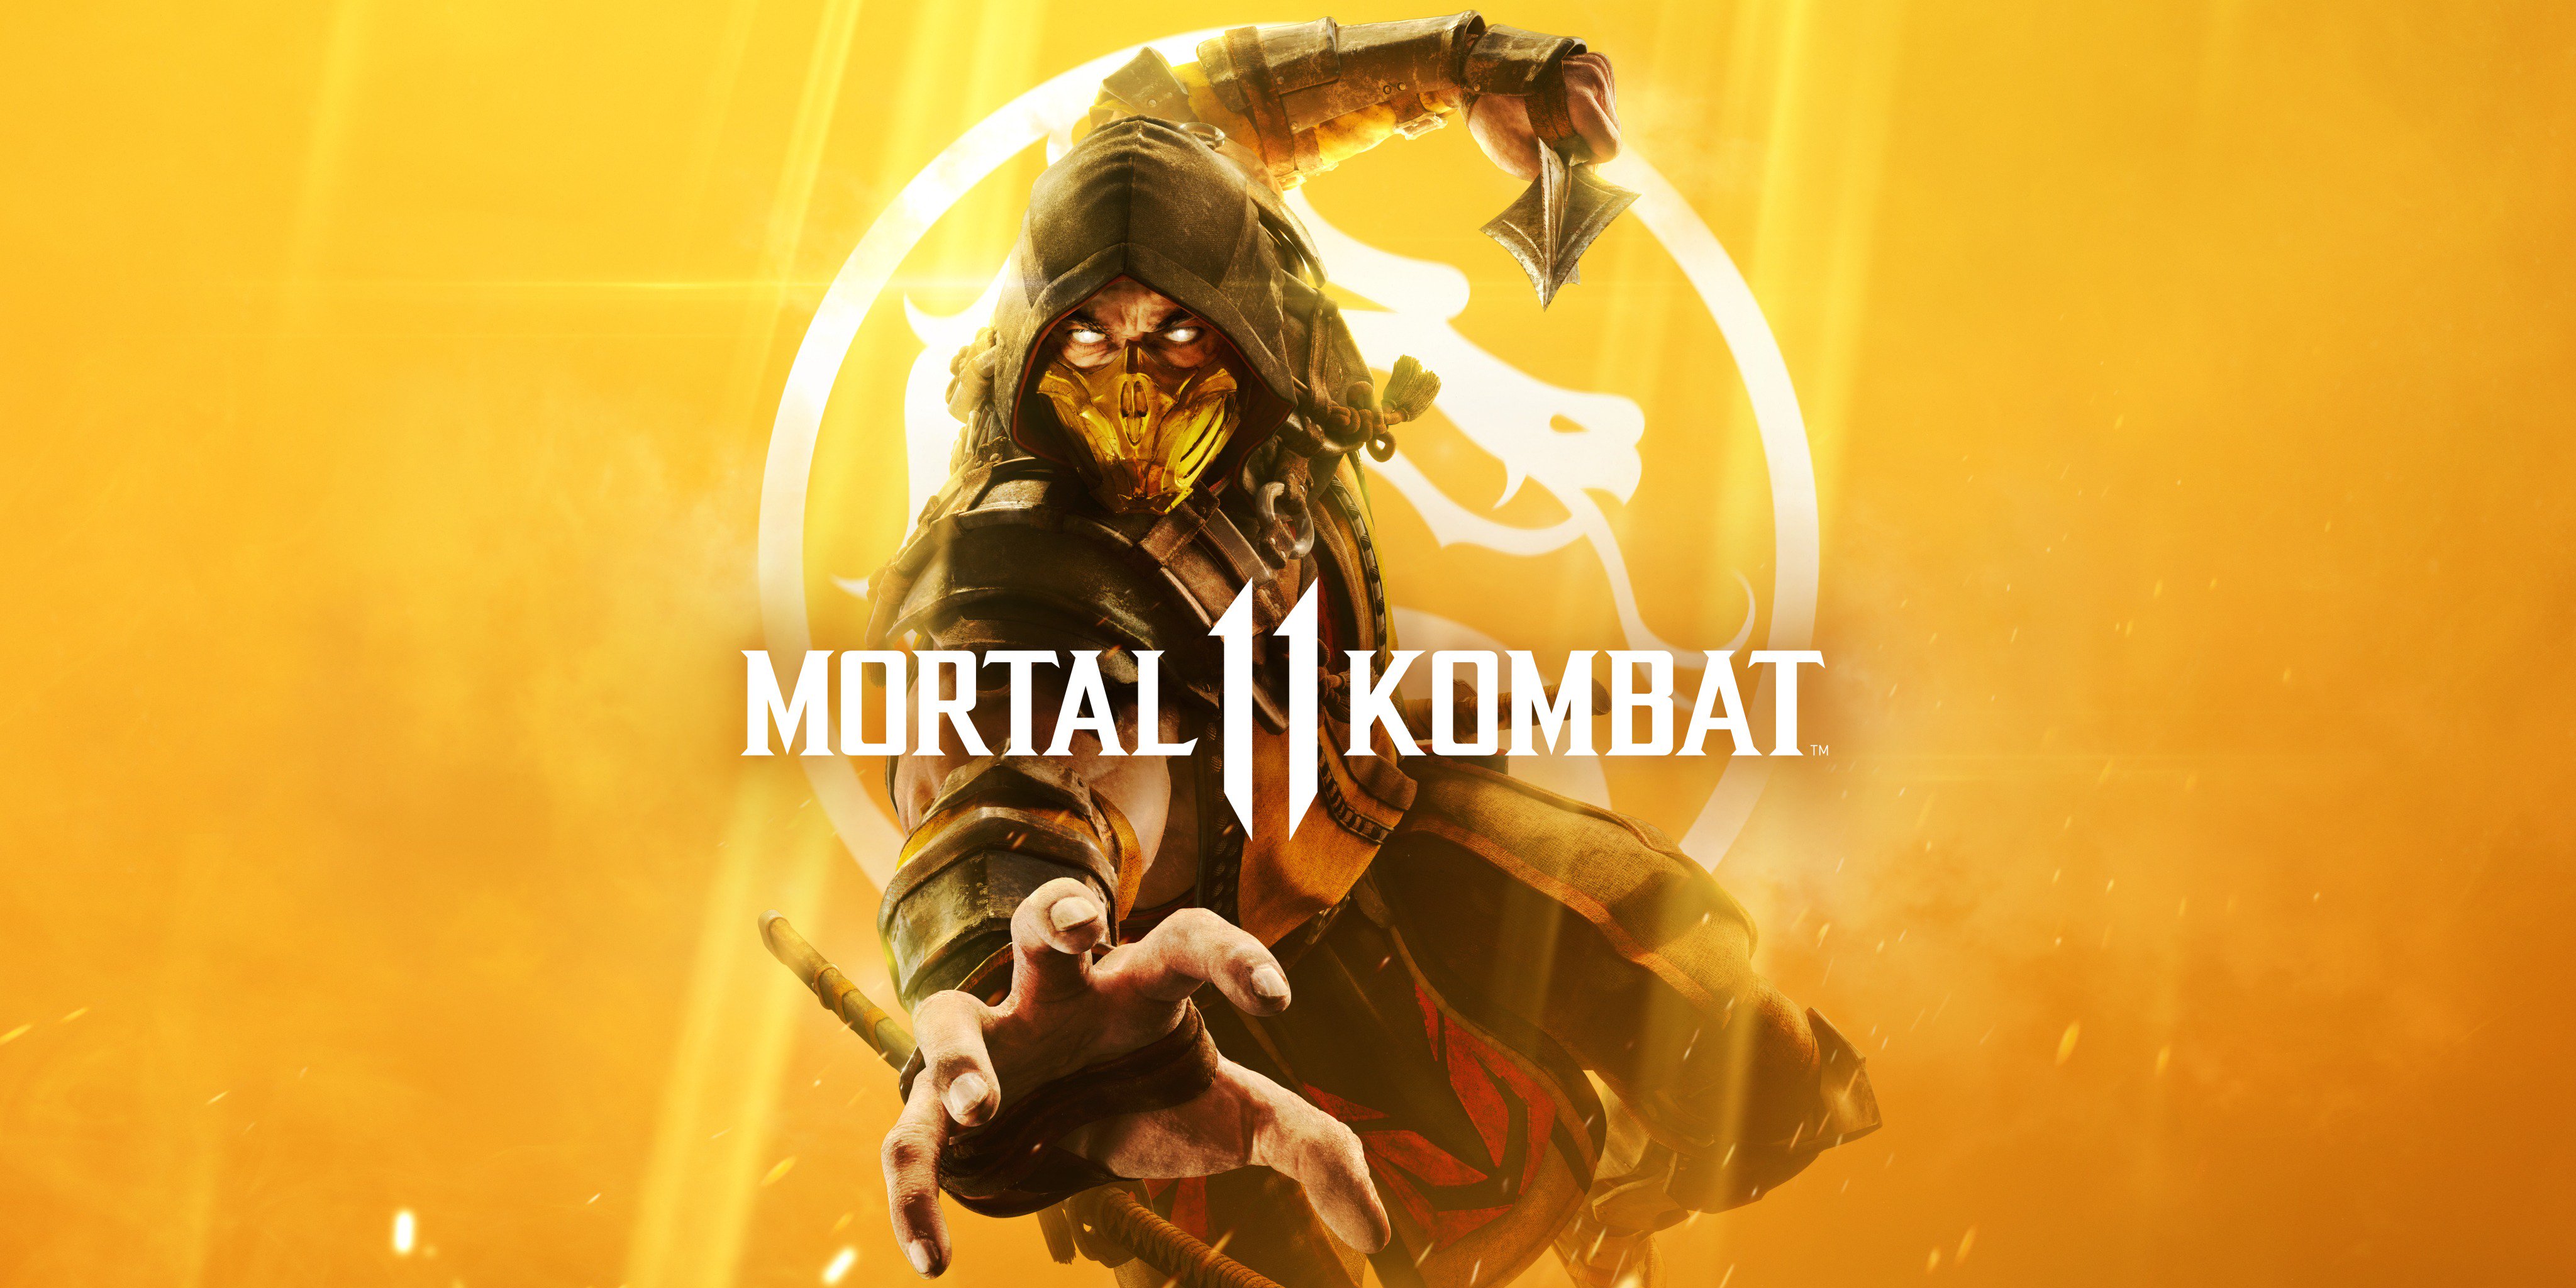 Mortal Kombat Scorpion Character Mortal Kombat 11 Video Game Warriors Video Game Art Video Games 4096x2048